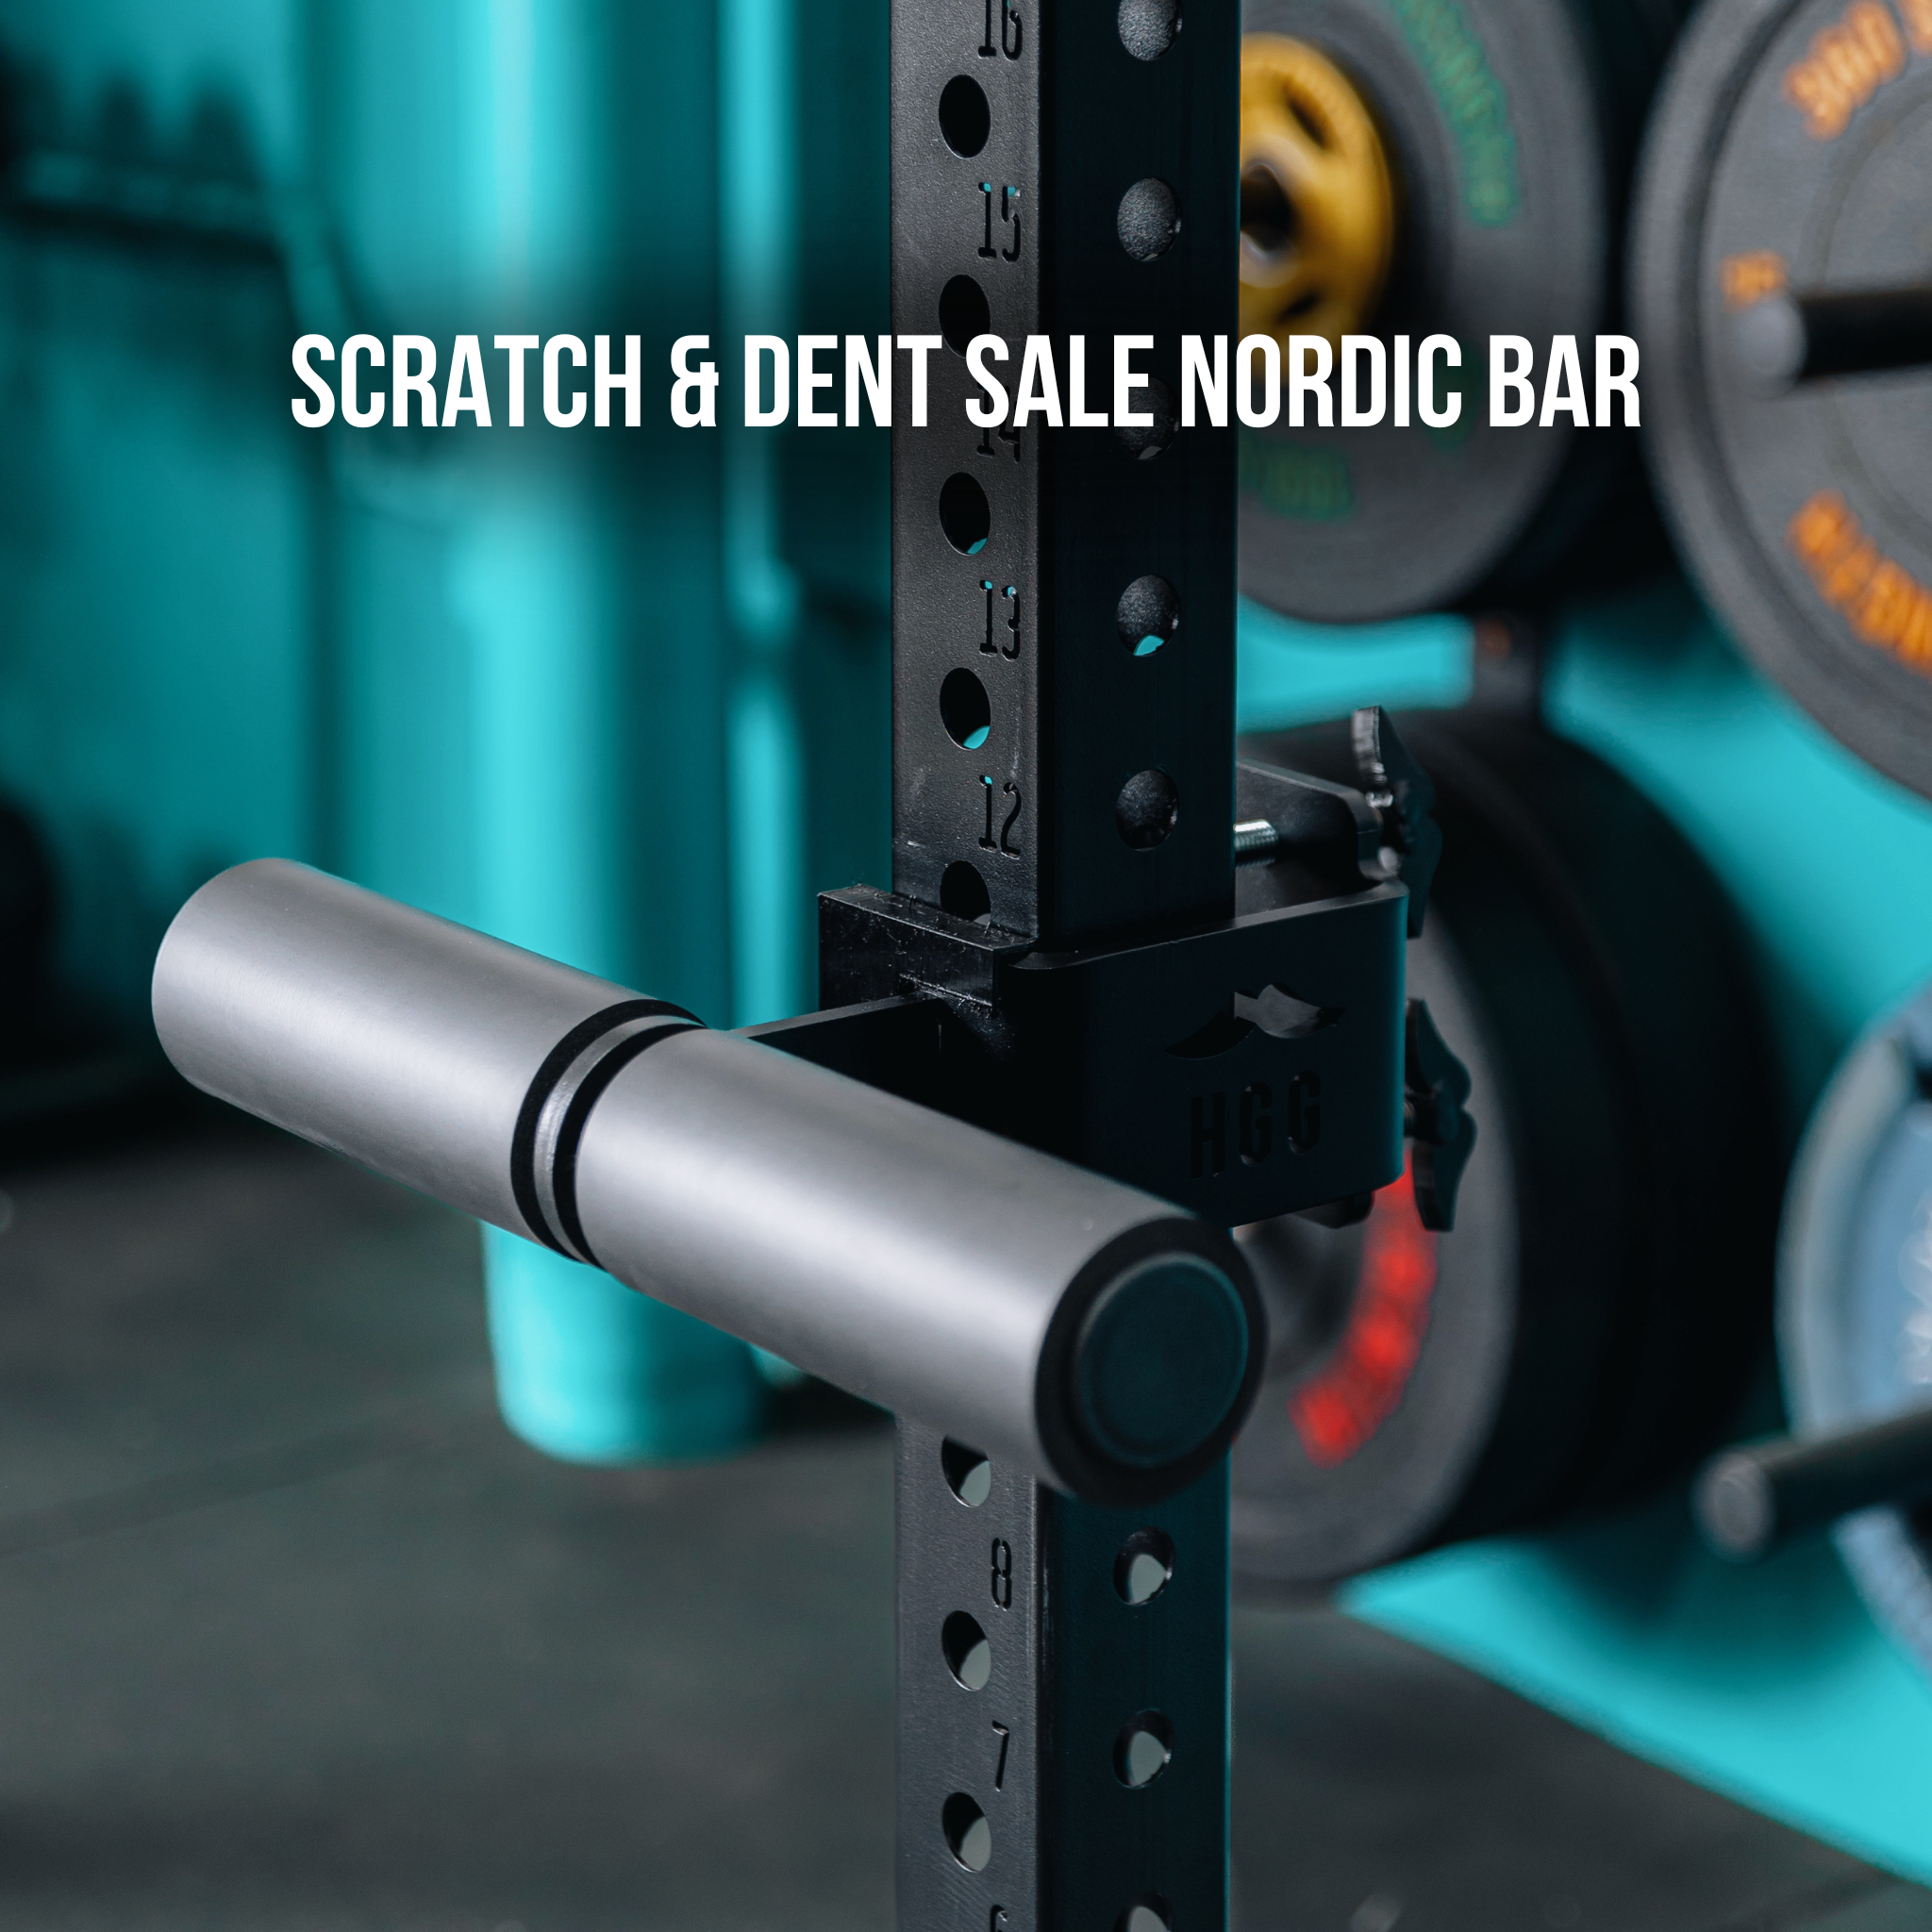 SCRATCH & DENT SALE - The Nordic Bar